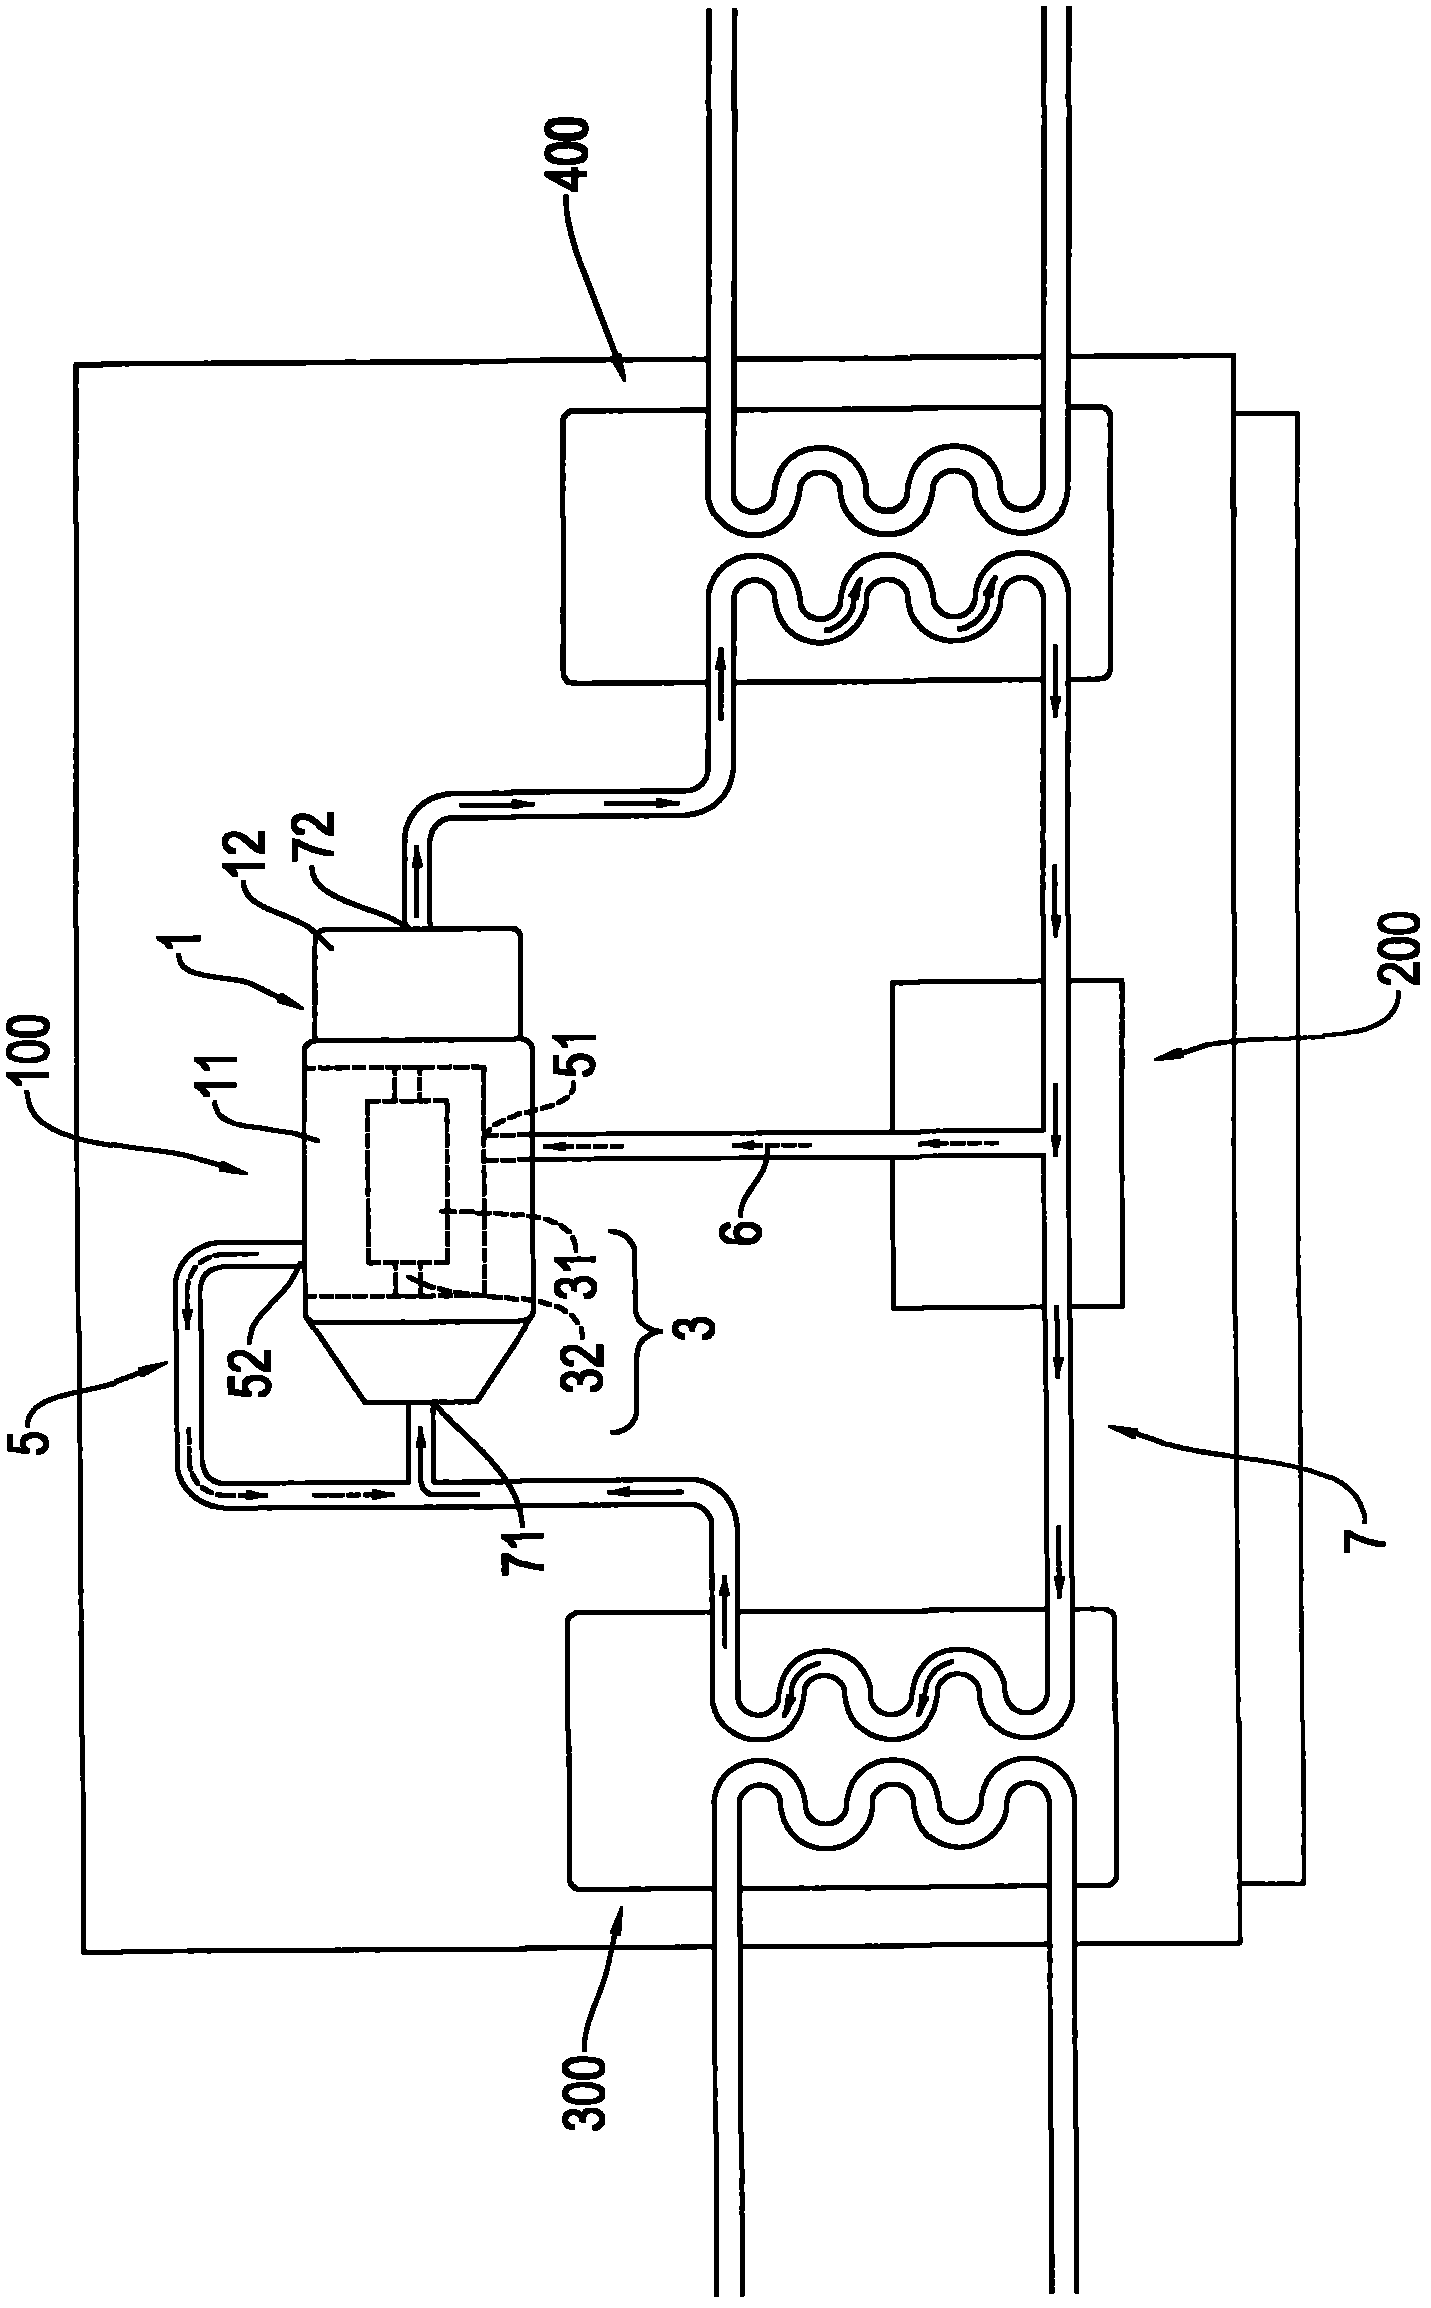 Multistage heat pump compressor